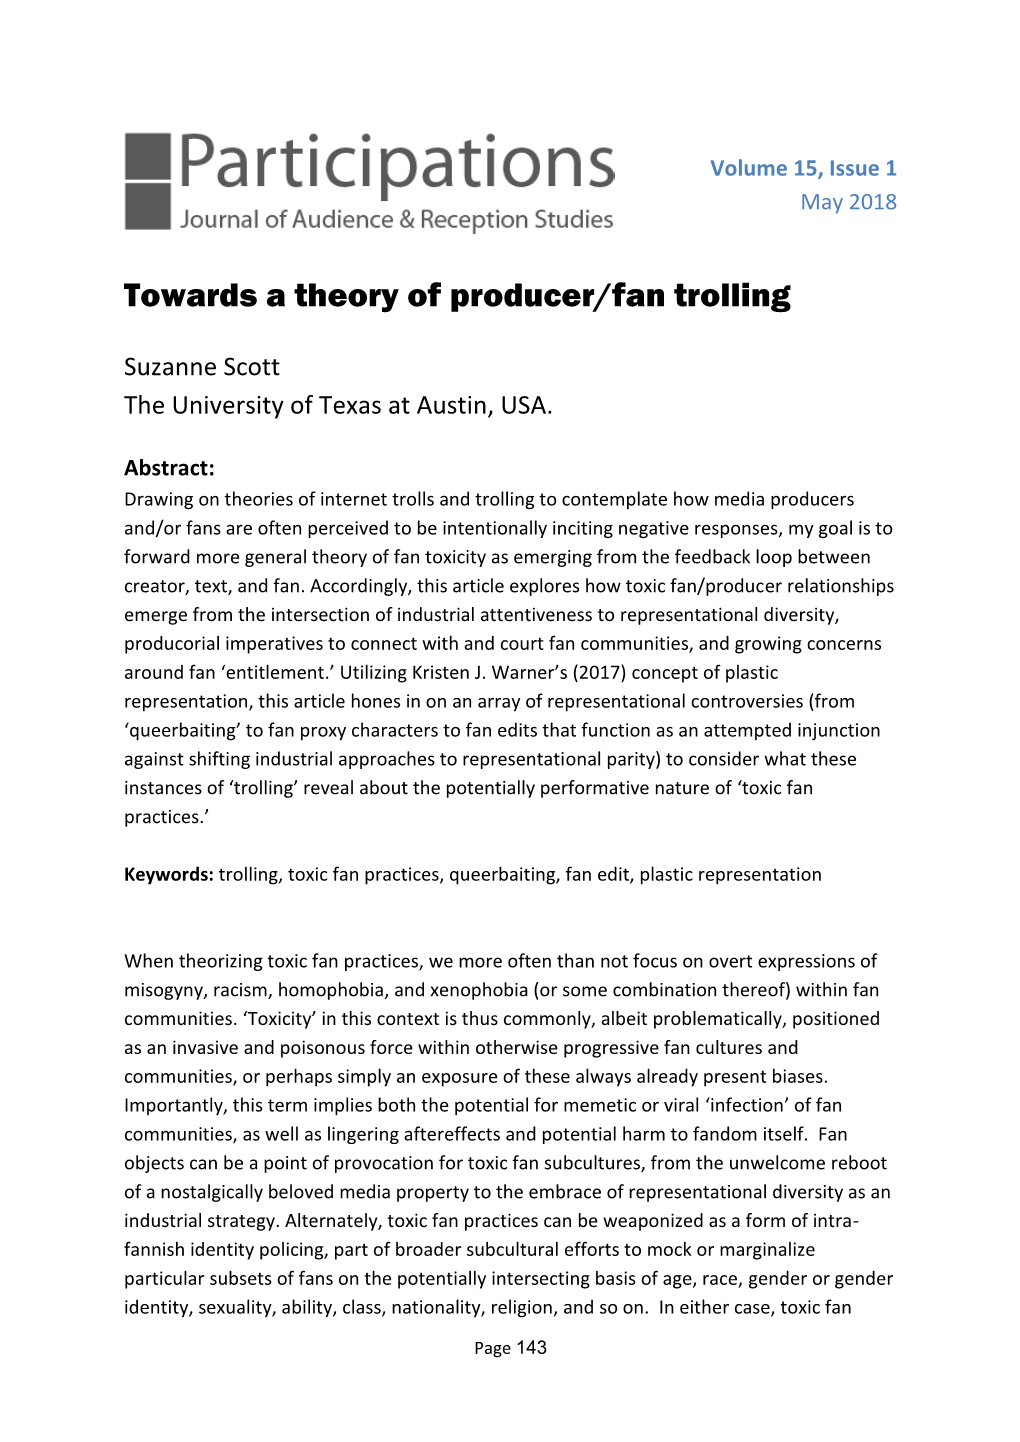 Towards a Theory of Producer/Fan Trolling